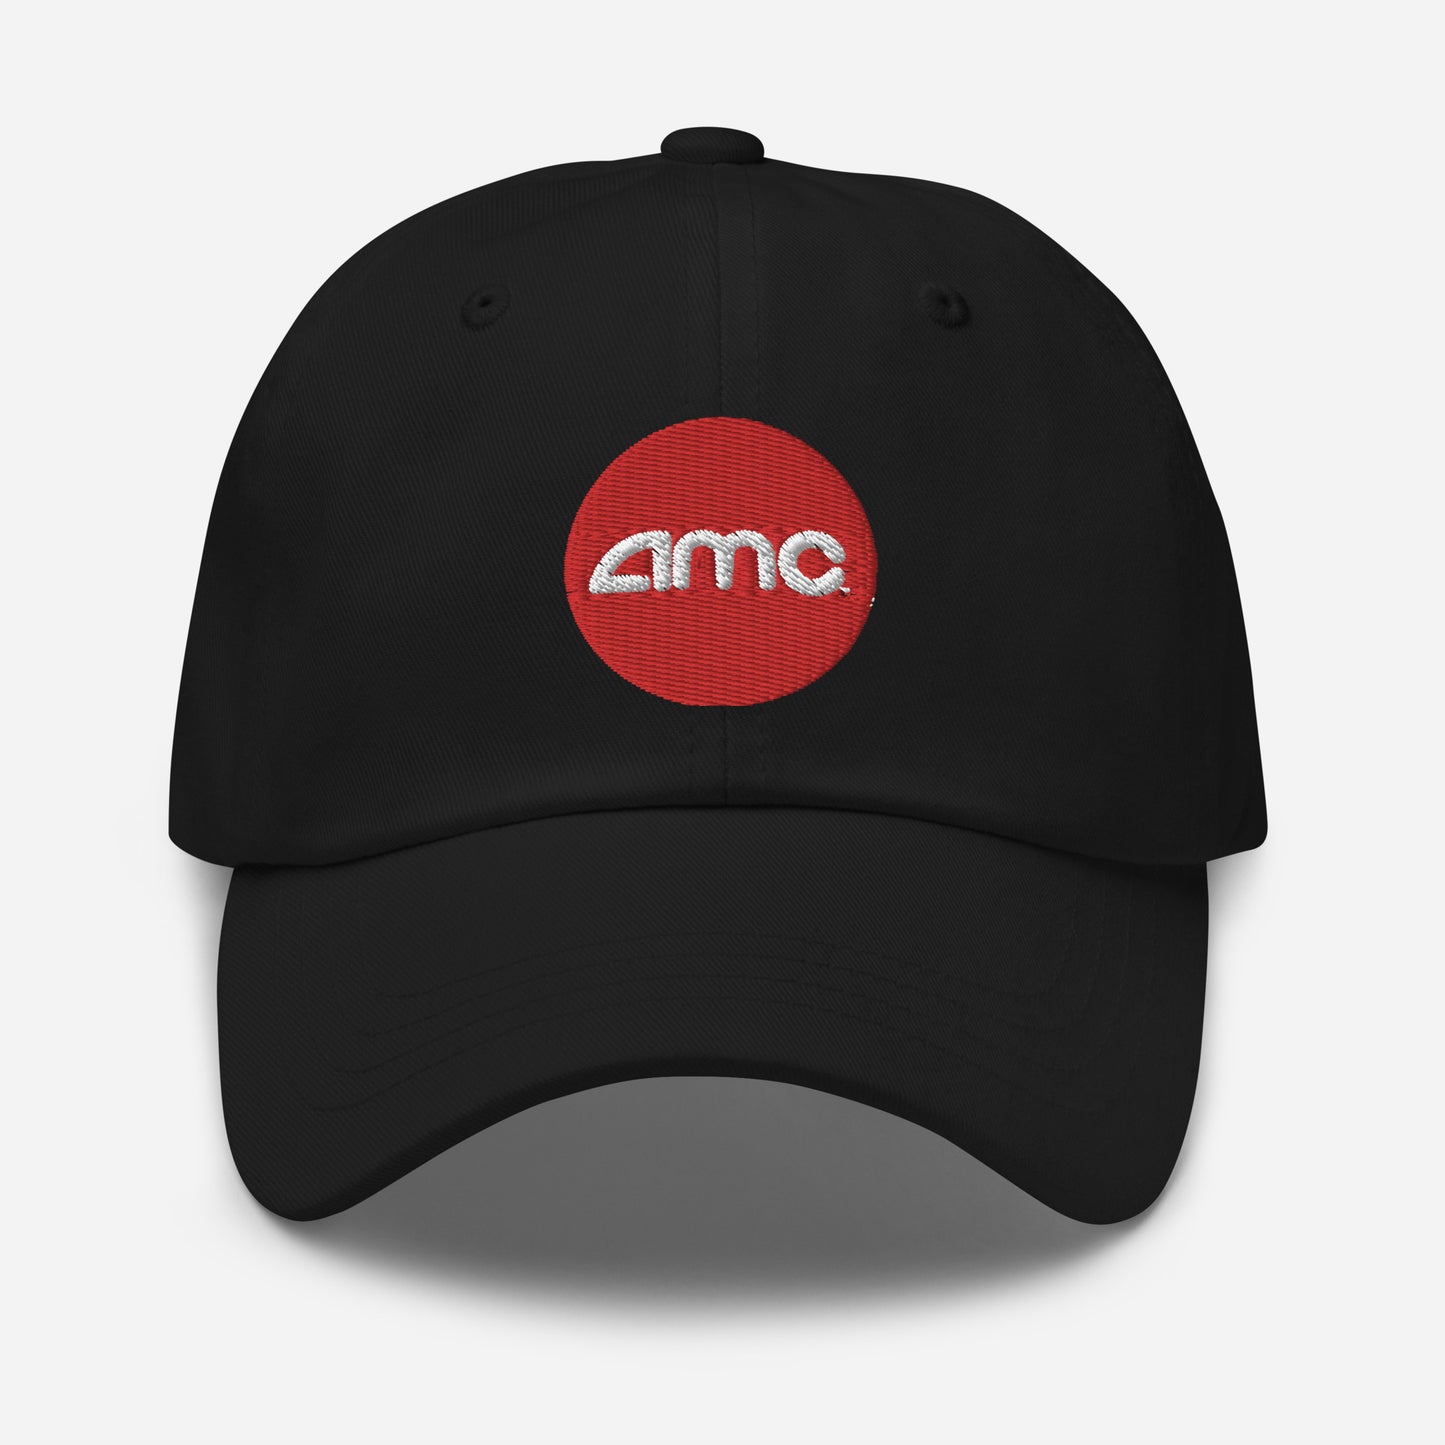 AMC Hat